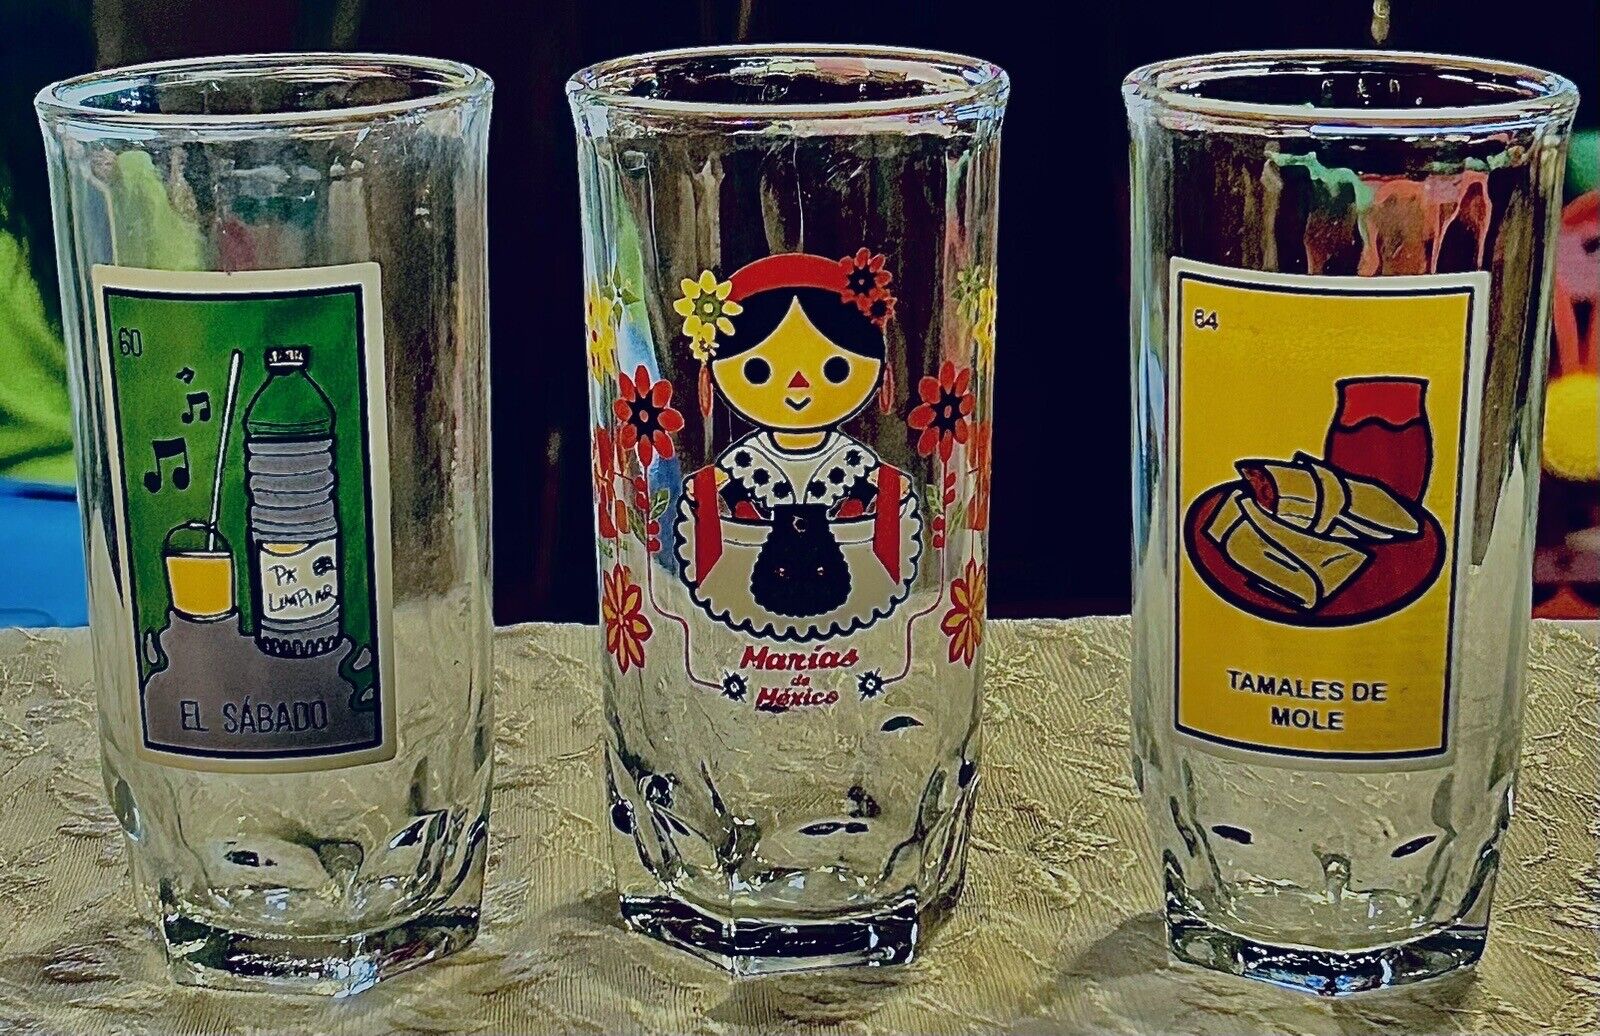 CRISA LOTERIA “EL SABADO”, “TAMALES DE MOLE” AND MARIA DE MEXICO” GLASS Set Of 3